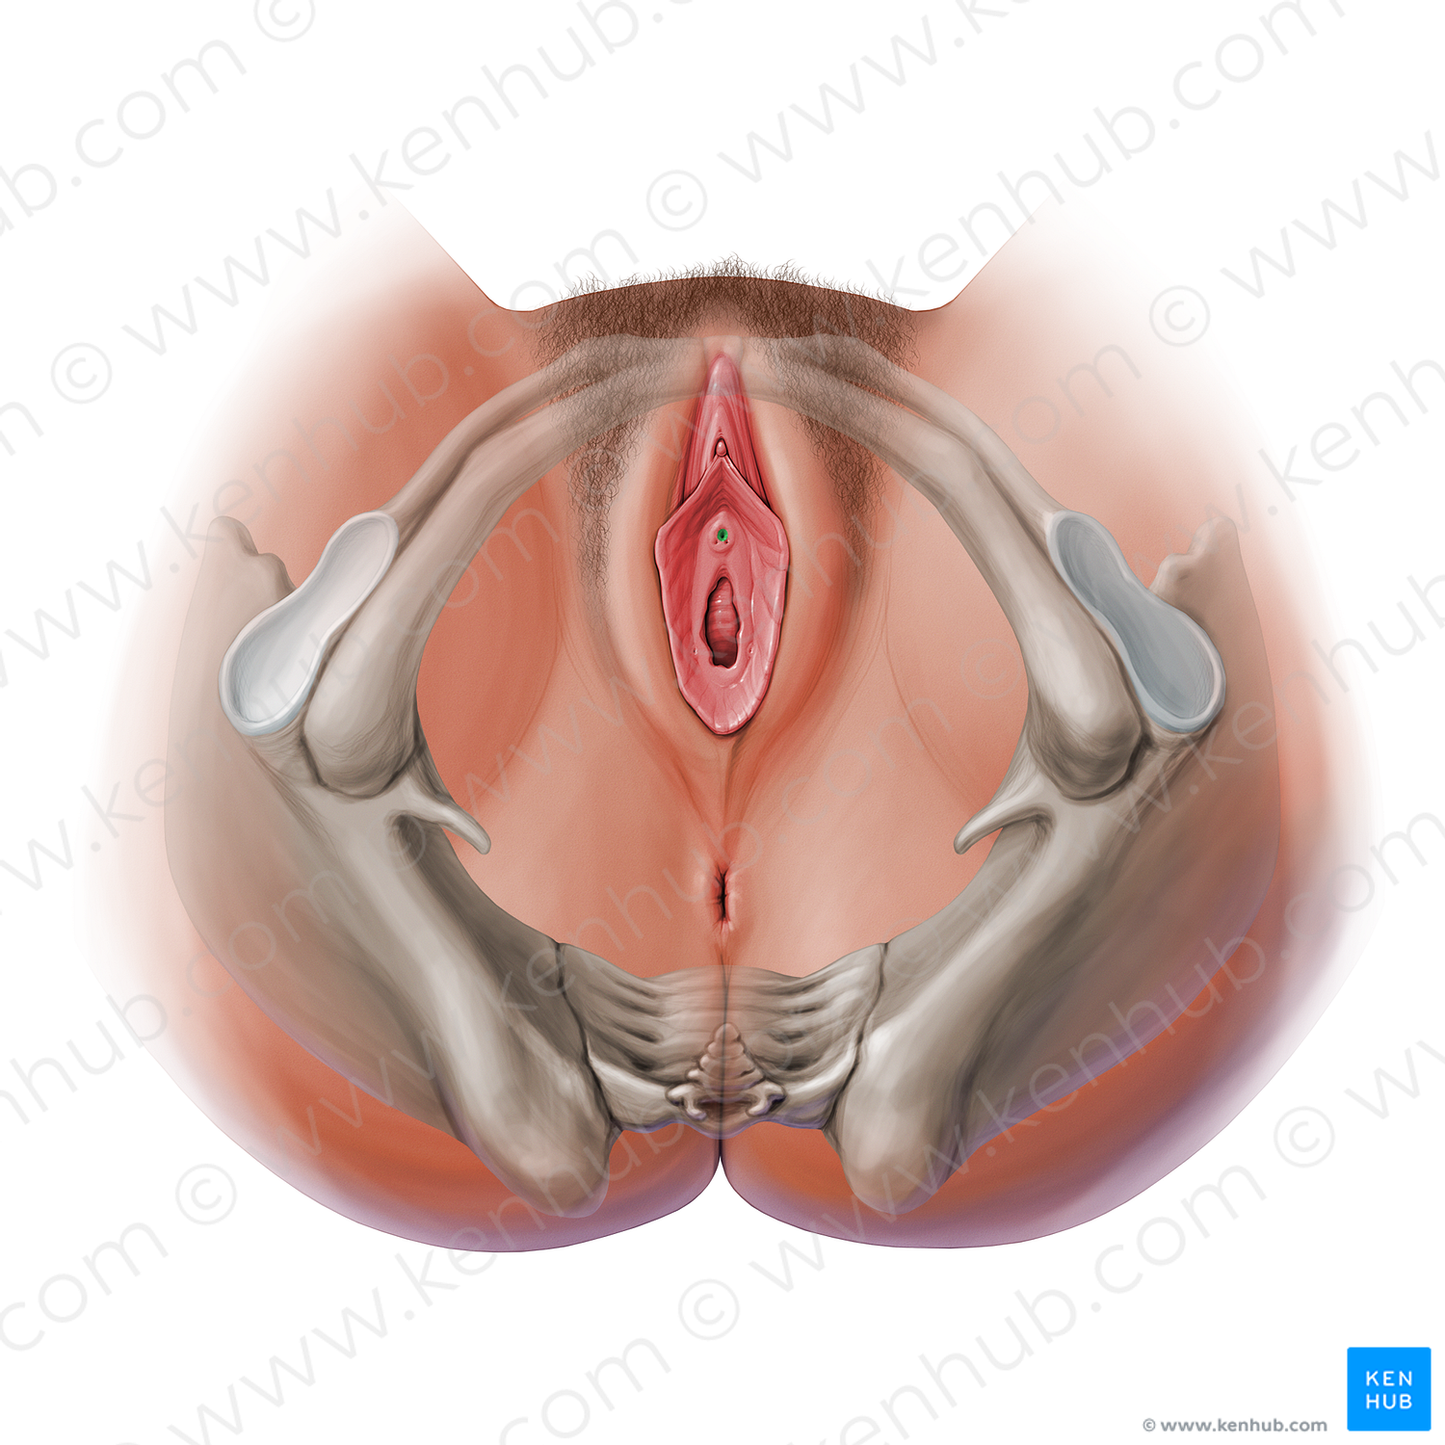 External orifice of urethra (#13615)